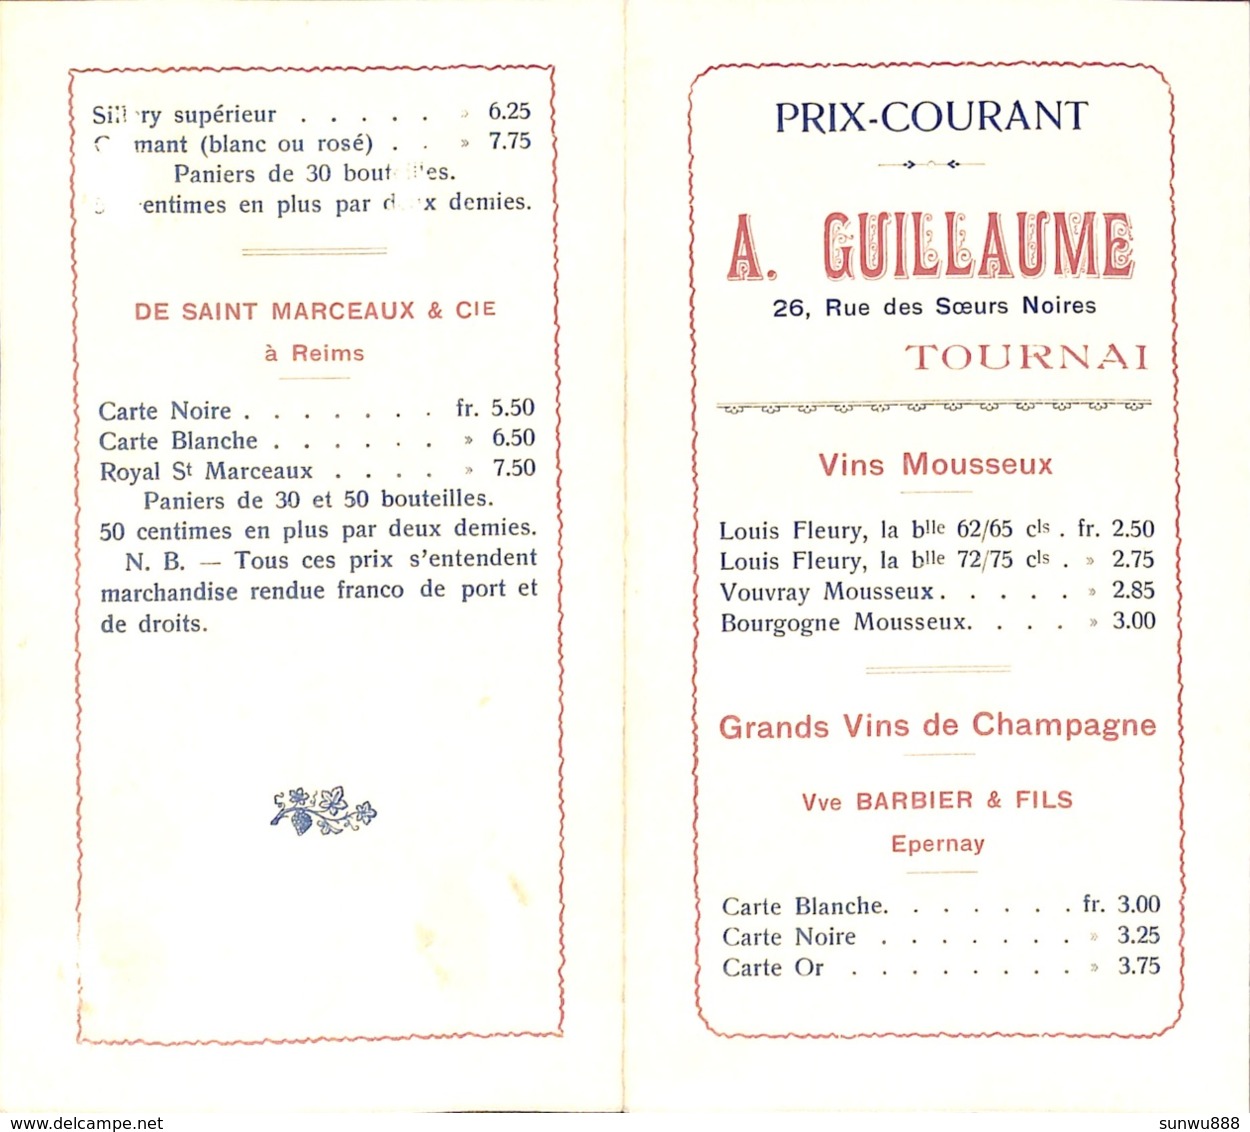 Prix-Courant A. Guillaume Tournai - Vins Mousseux, Champagne Epernay, Crémant... - Alimentos